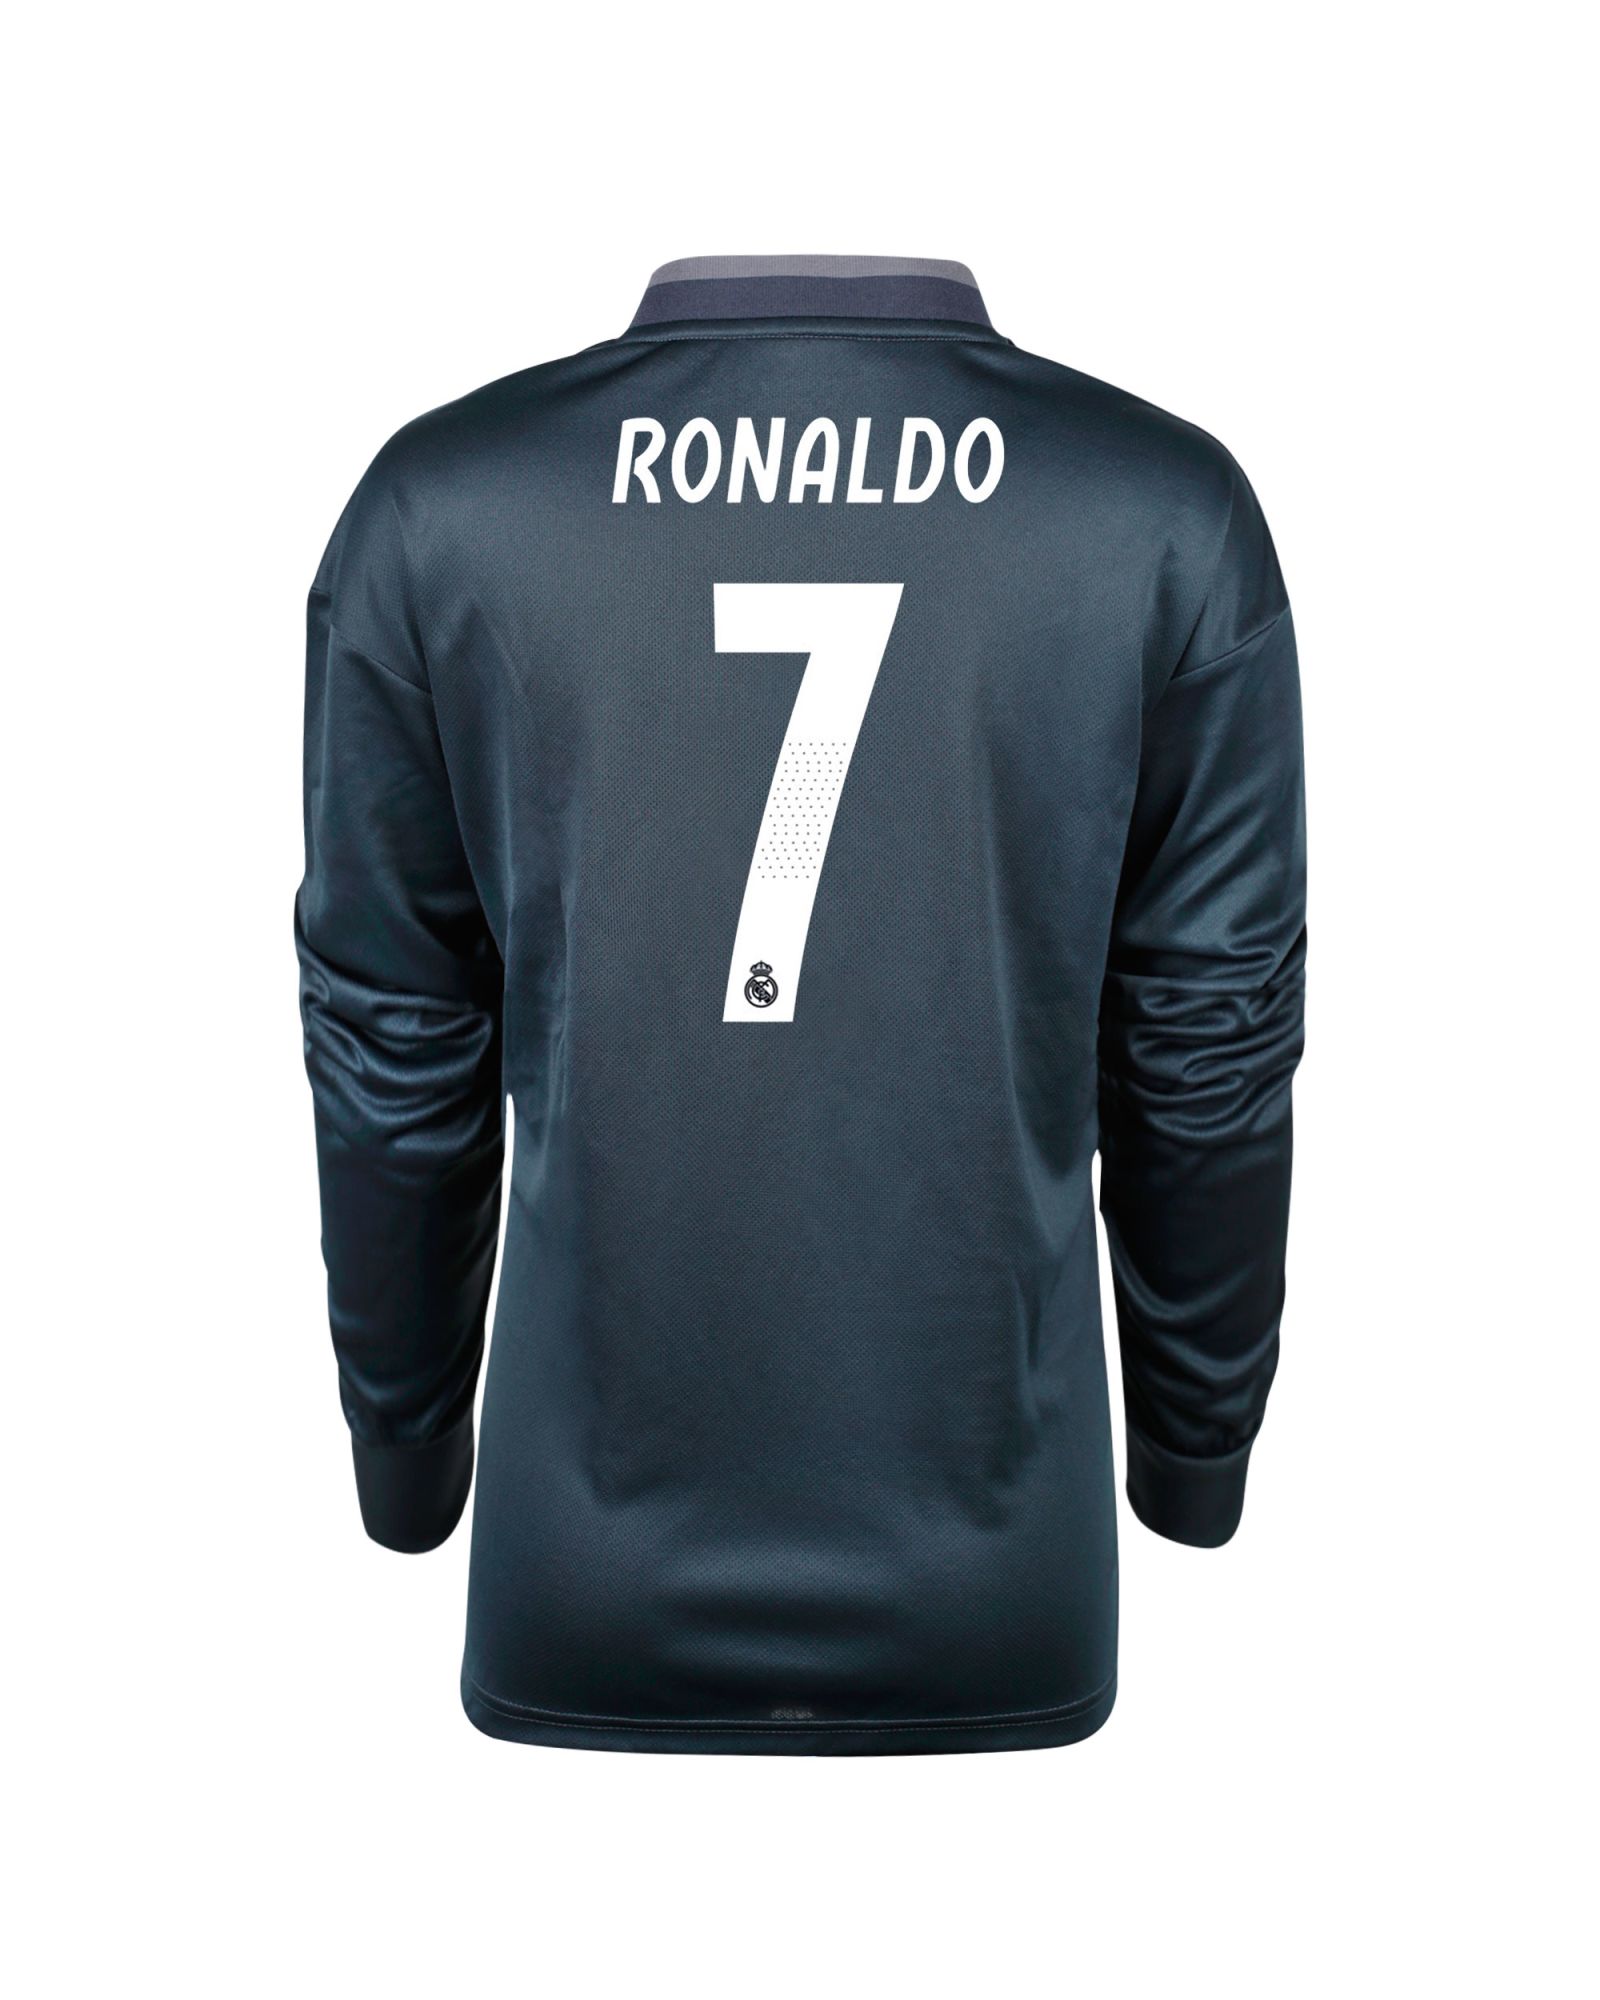 Camiseta 2ª Real Madrid 2018/2019 Ronaldo Manga Larga Junior Gris - Fútbol Factory